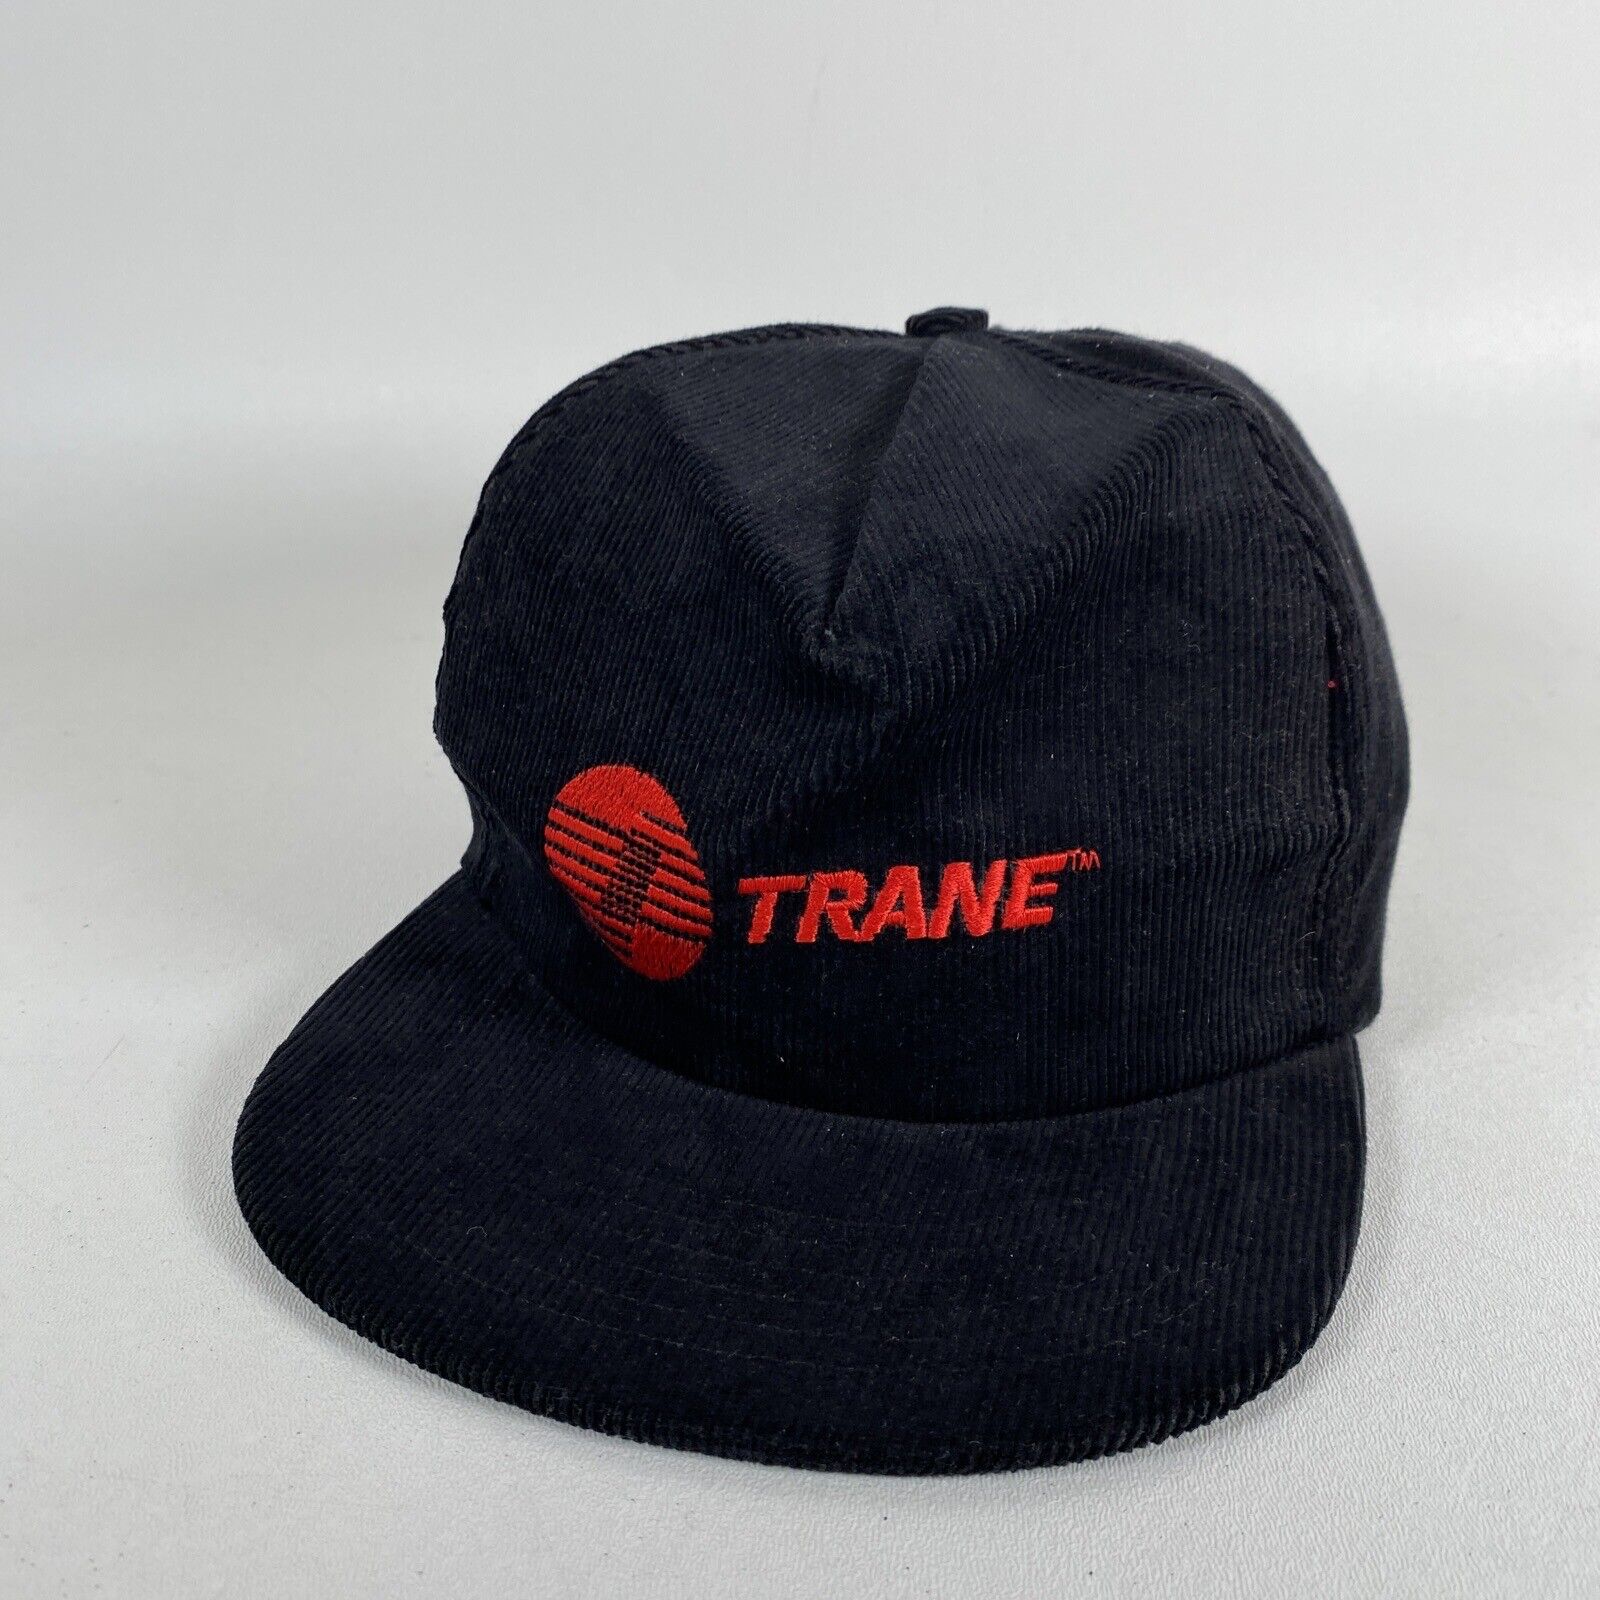 Vintage Trane AC HVAC Air Company SnapBack Corduroy Black Hat Cap